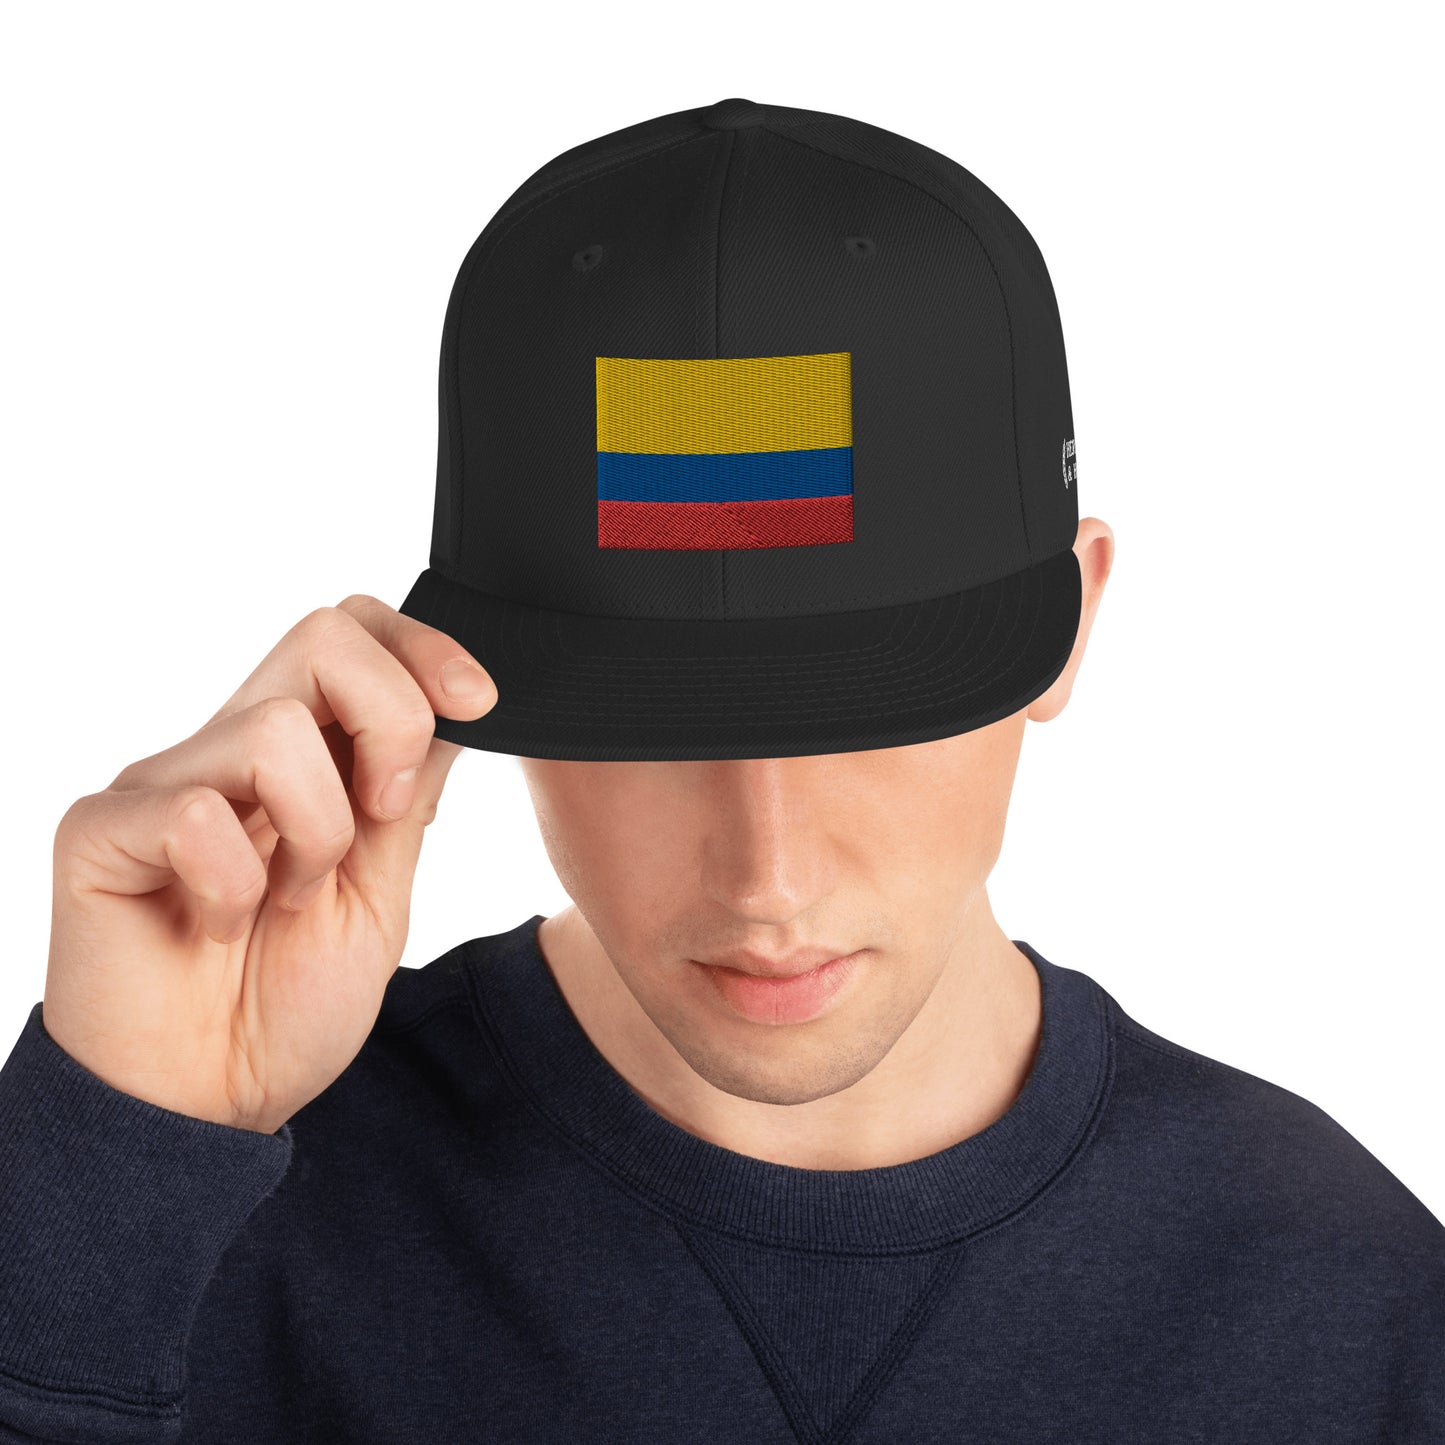 Heritage & Honor Snapback Cap 'Colombia' 2